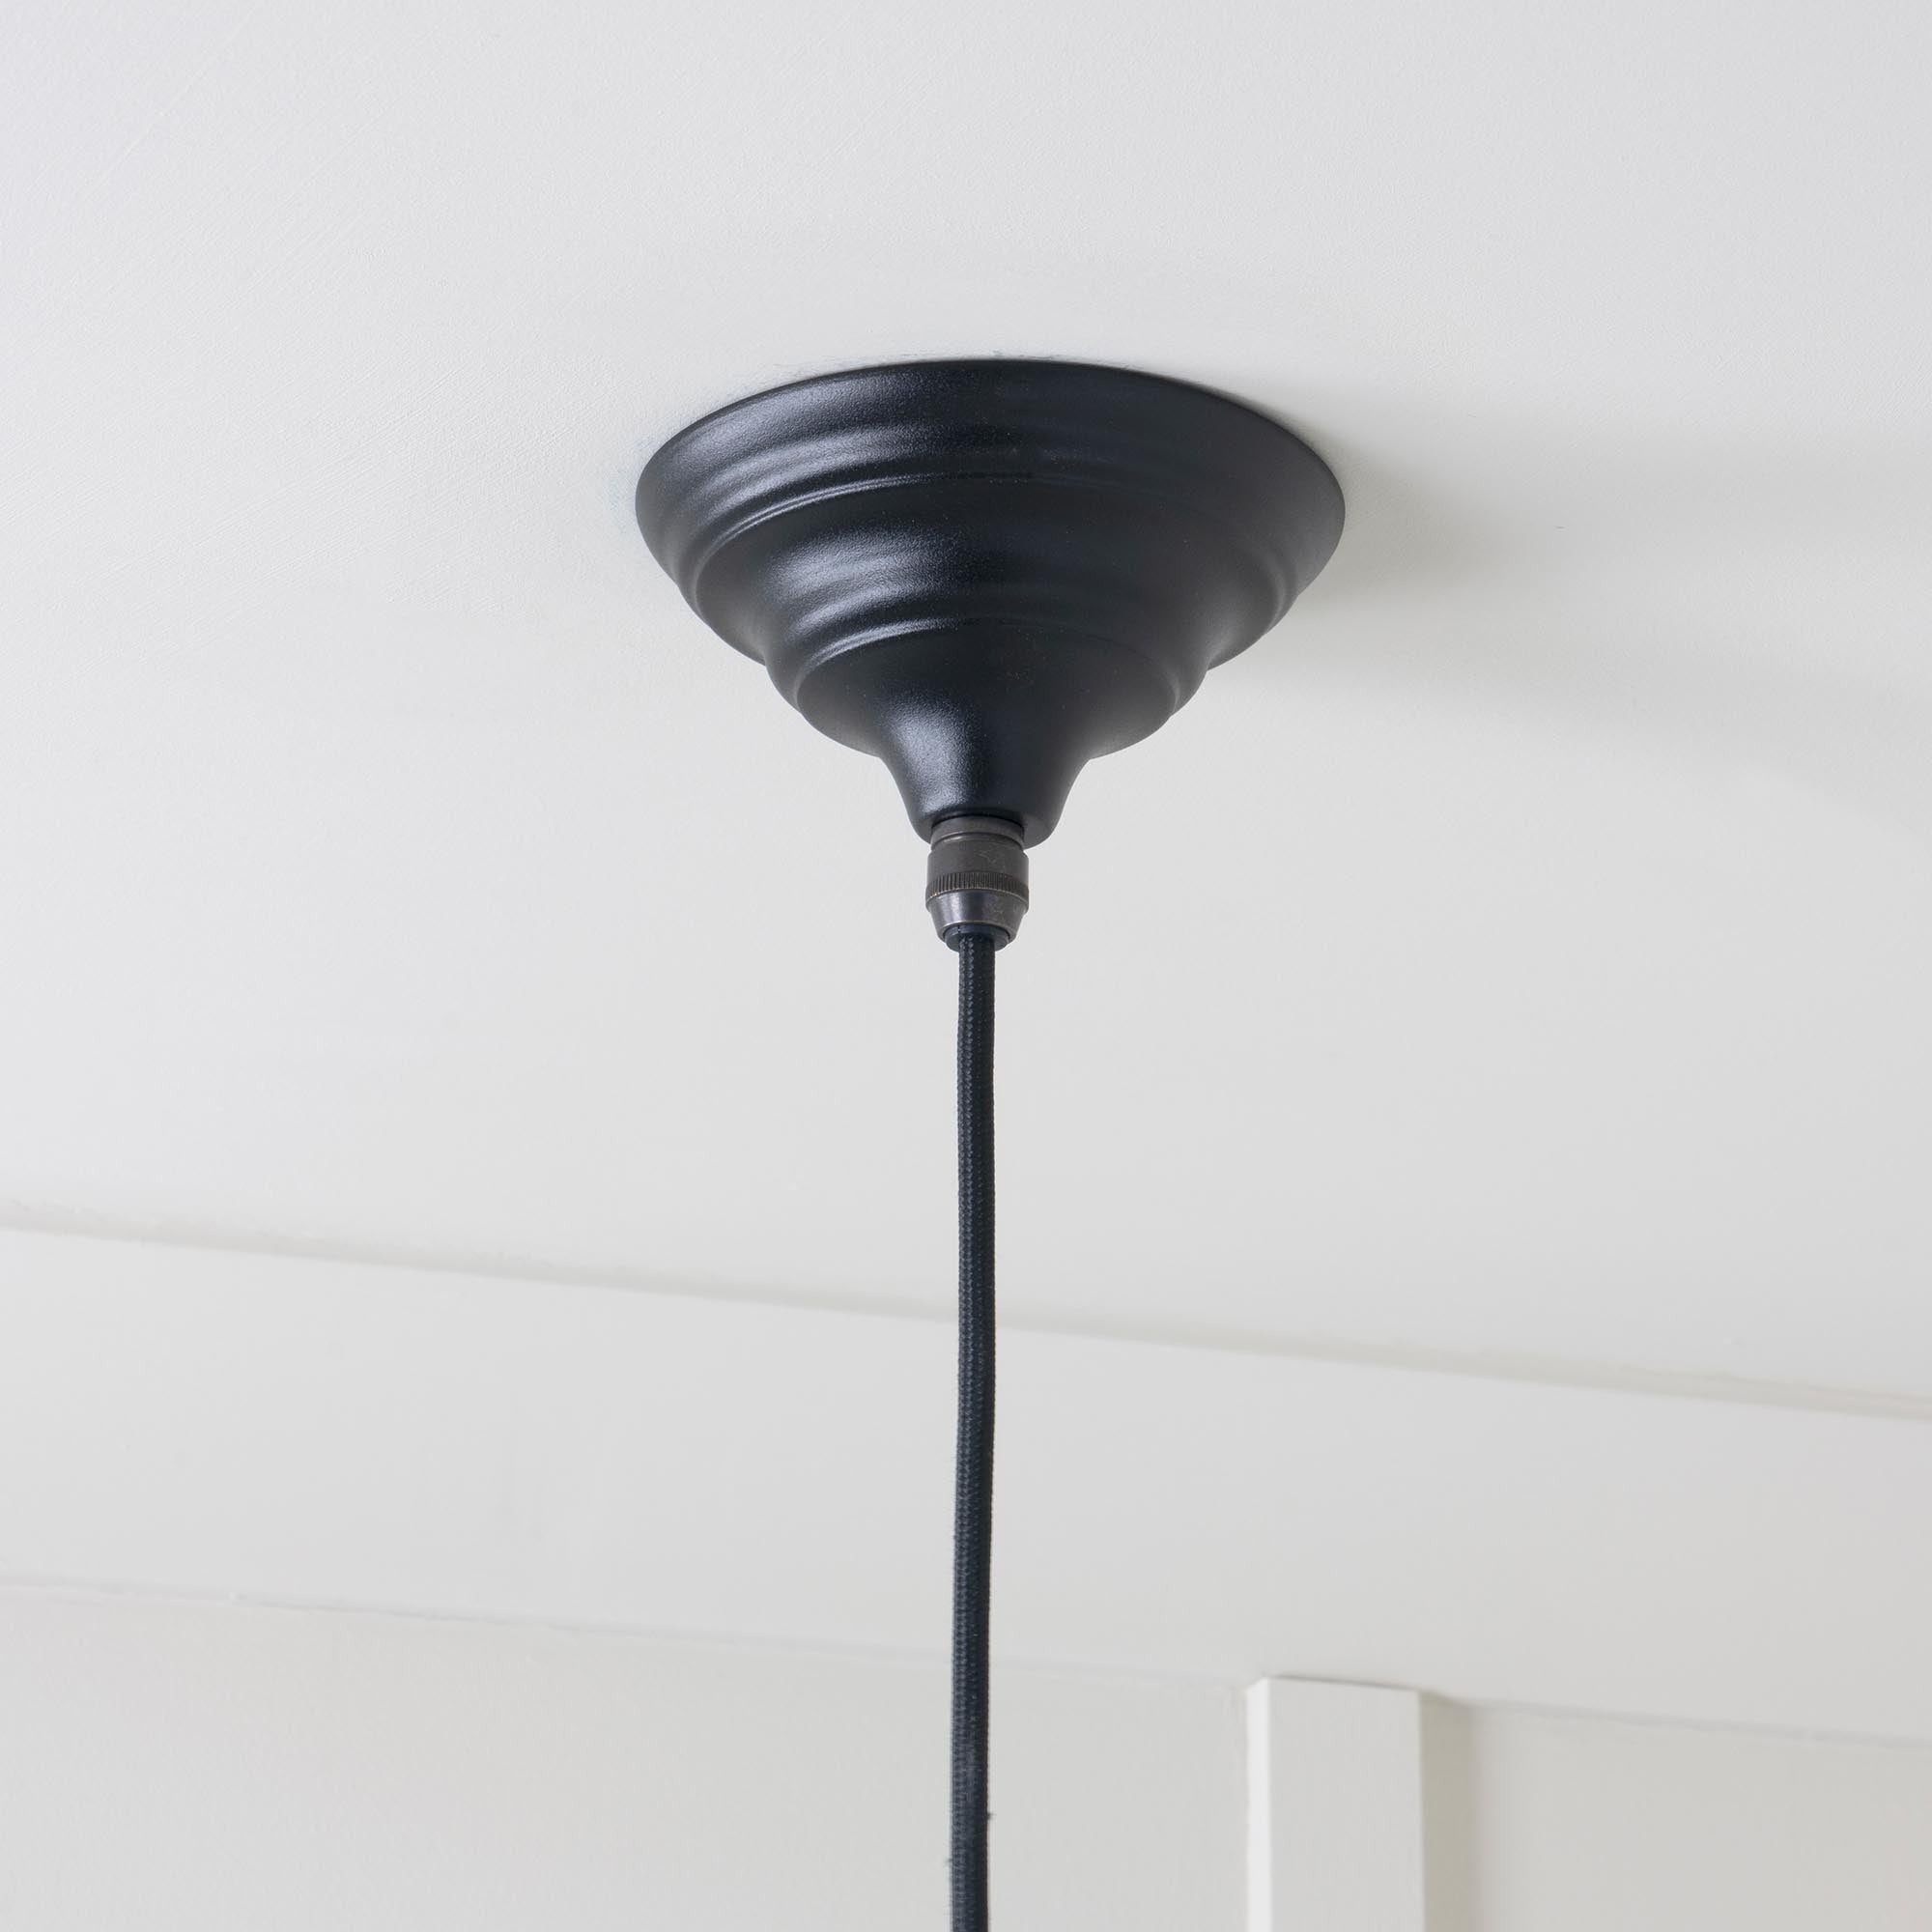 SHOW Close Up Image of Ceiling Rose for Brindley Ceiling Light in Elan Black